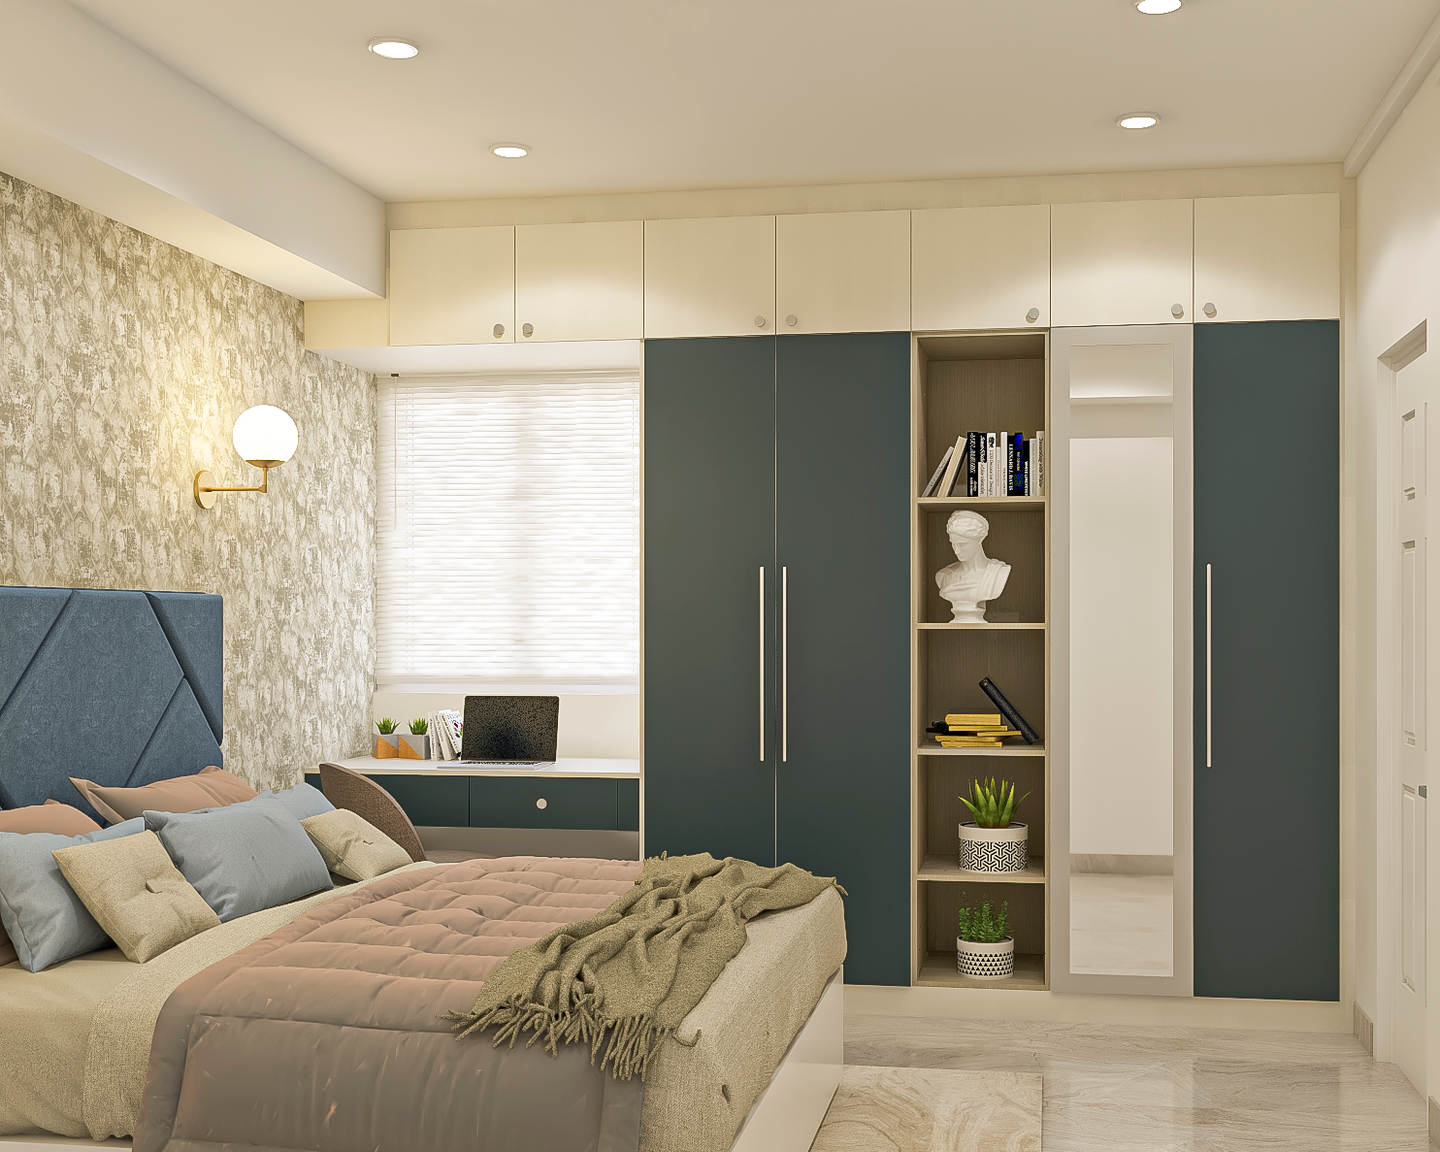 Multifunctional Contemporary Guest Bedroom Interiors Design - Livspace